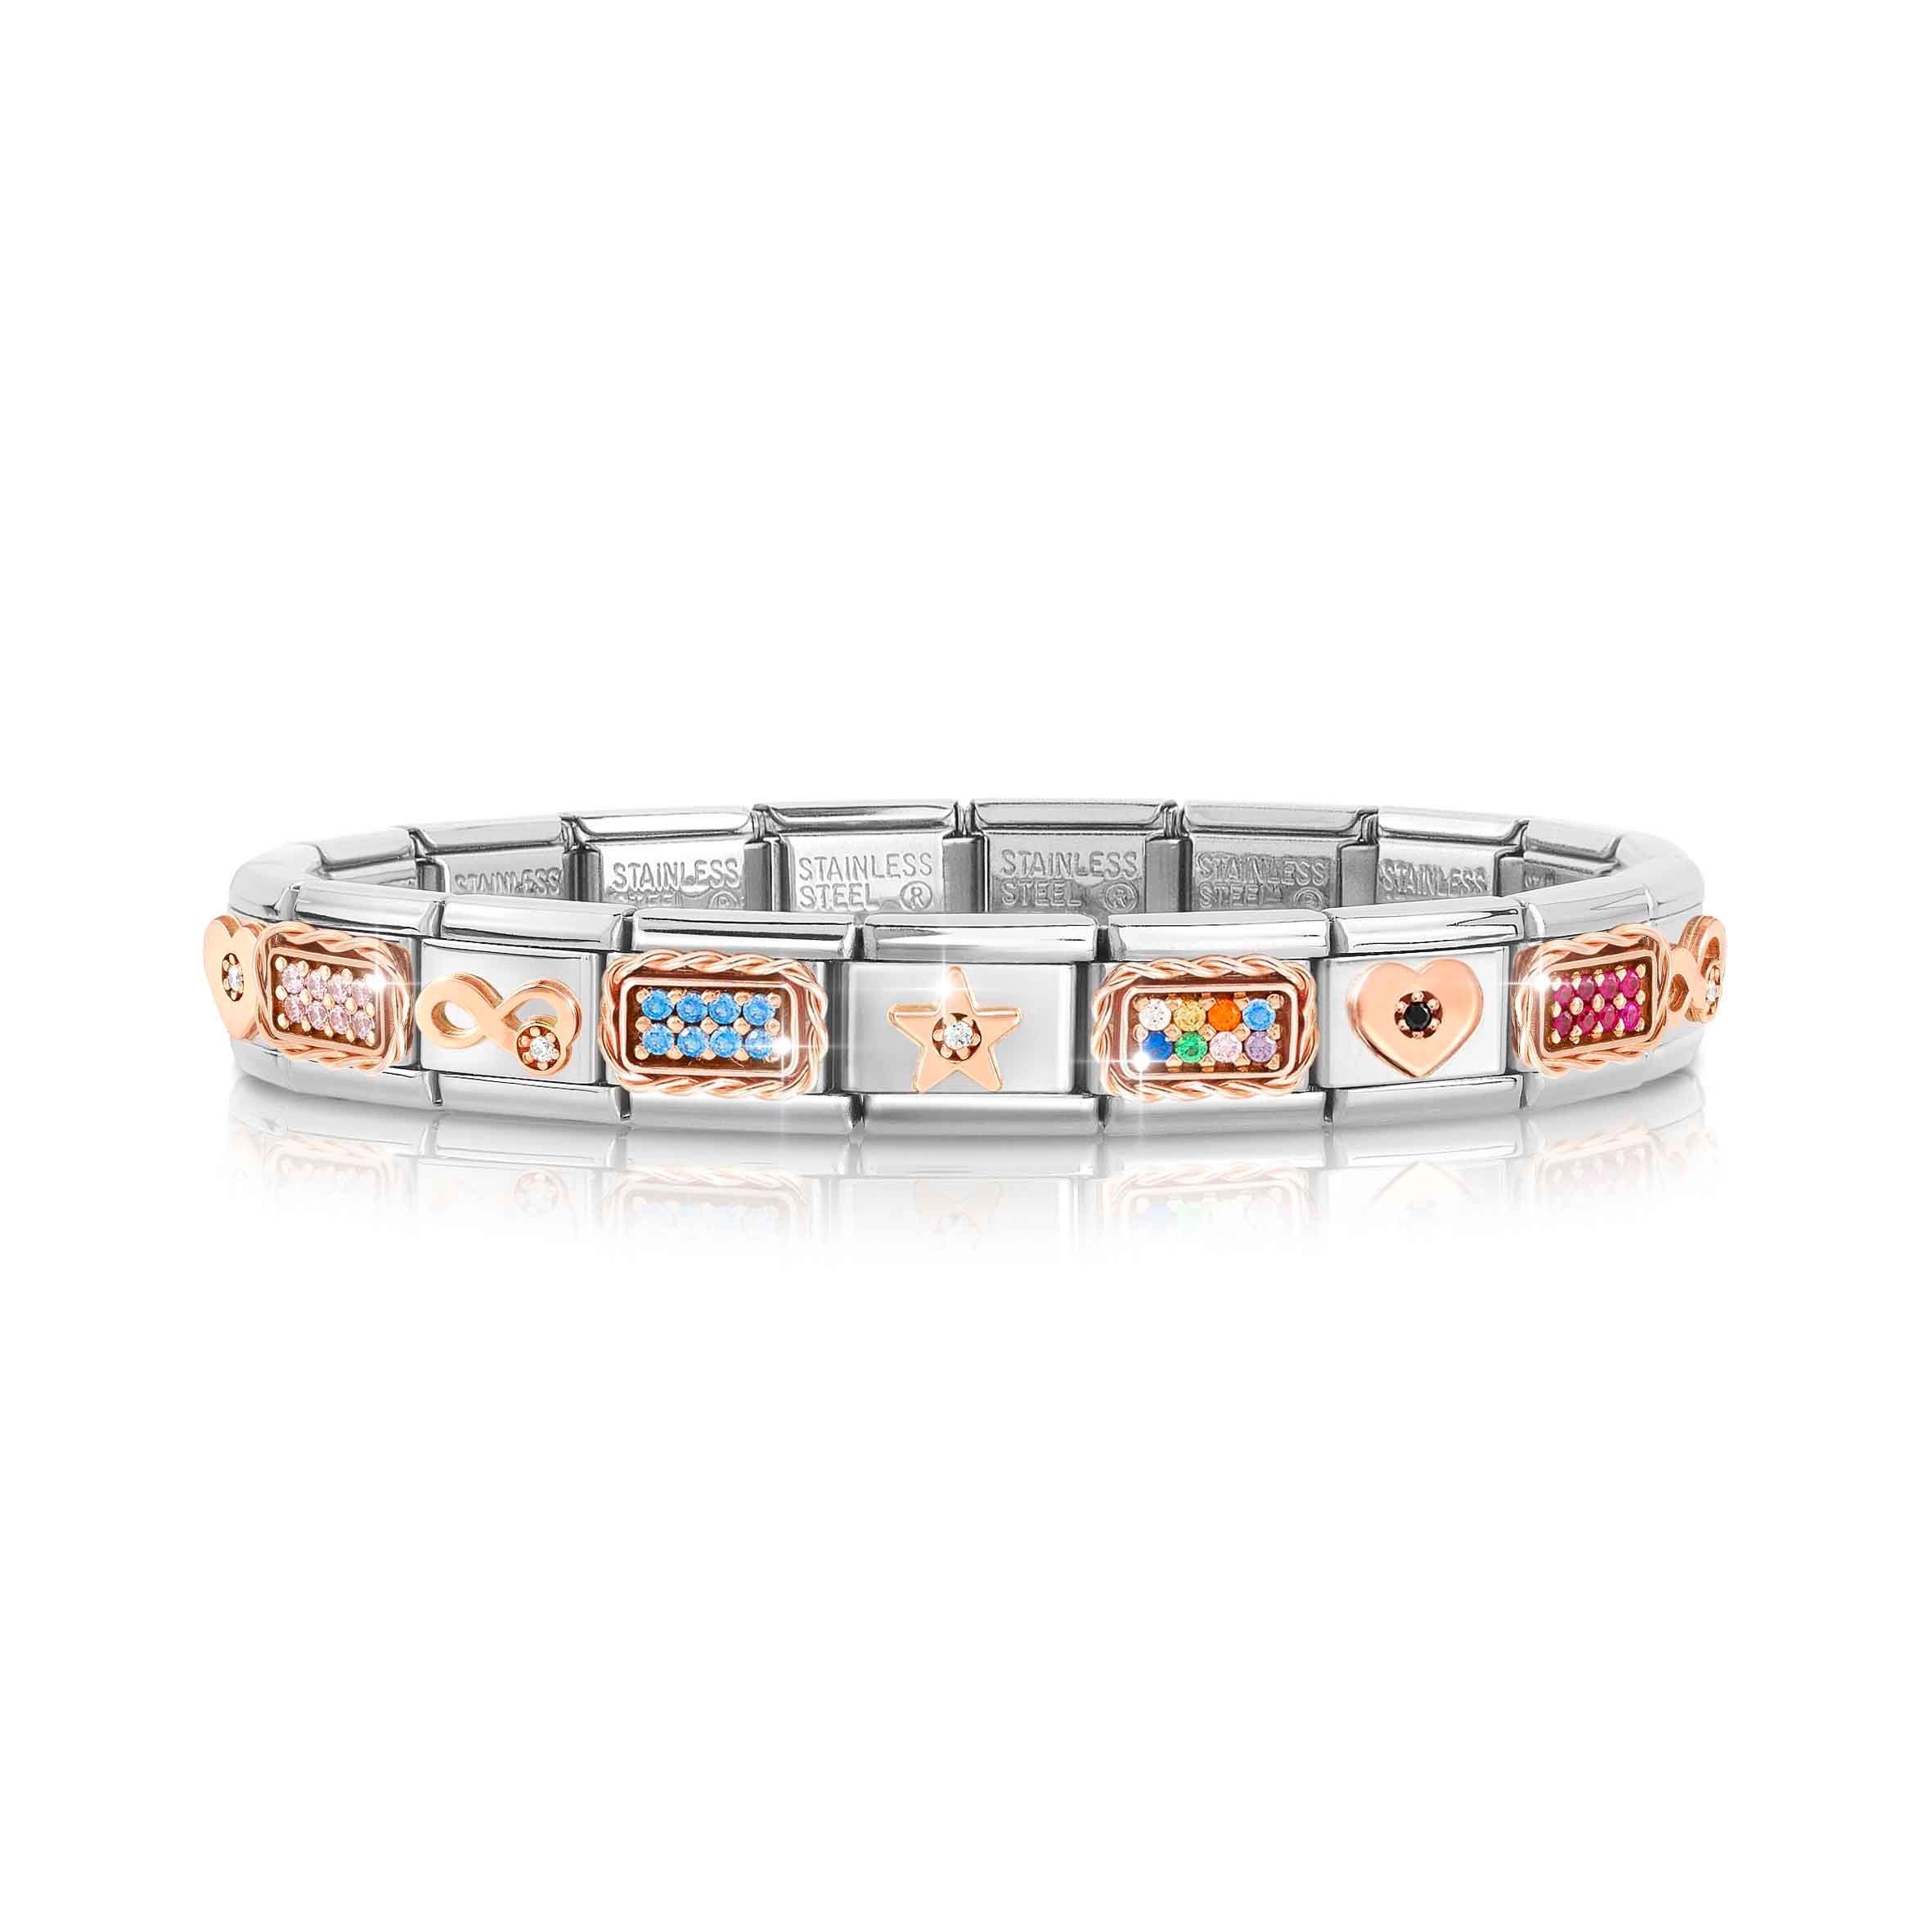 Nomination bracelets: Jewelry for Cherished Memories缩略图